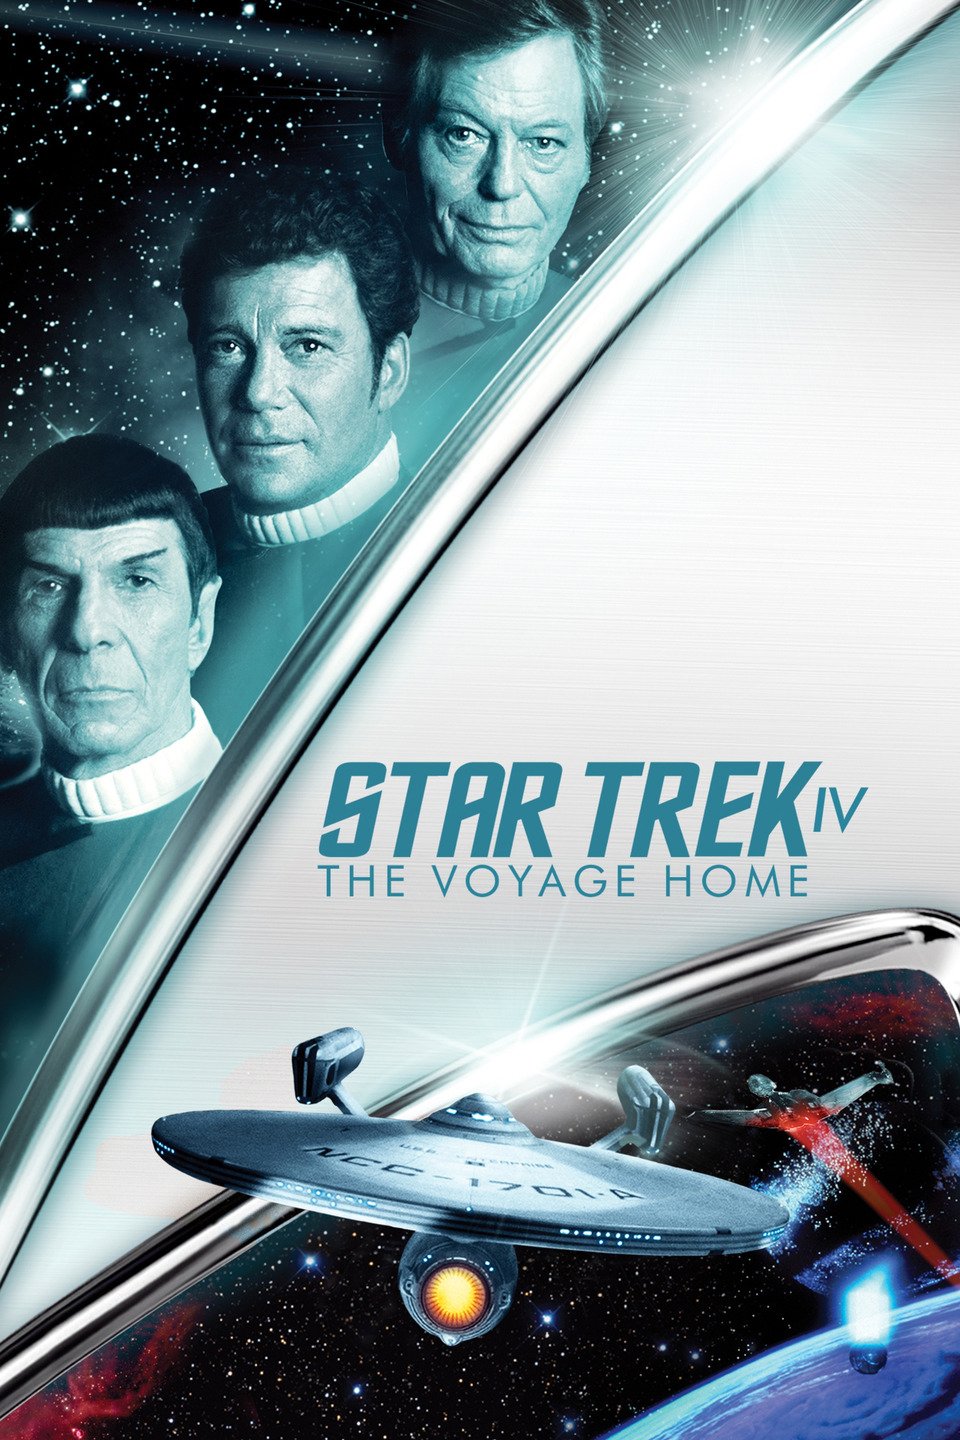 Star Trek IV: The Voyage Home poster